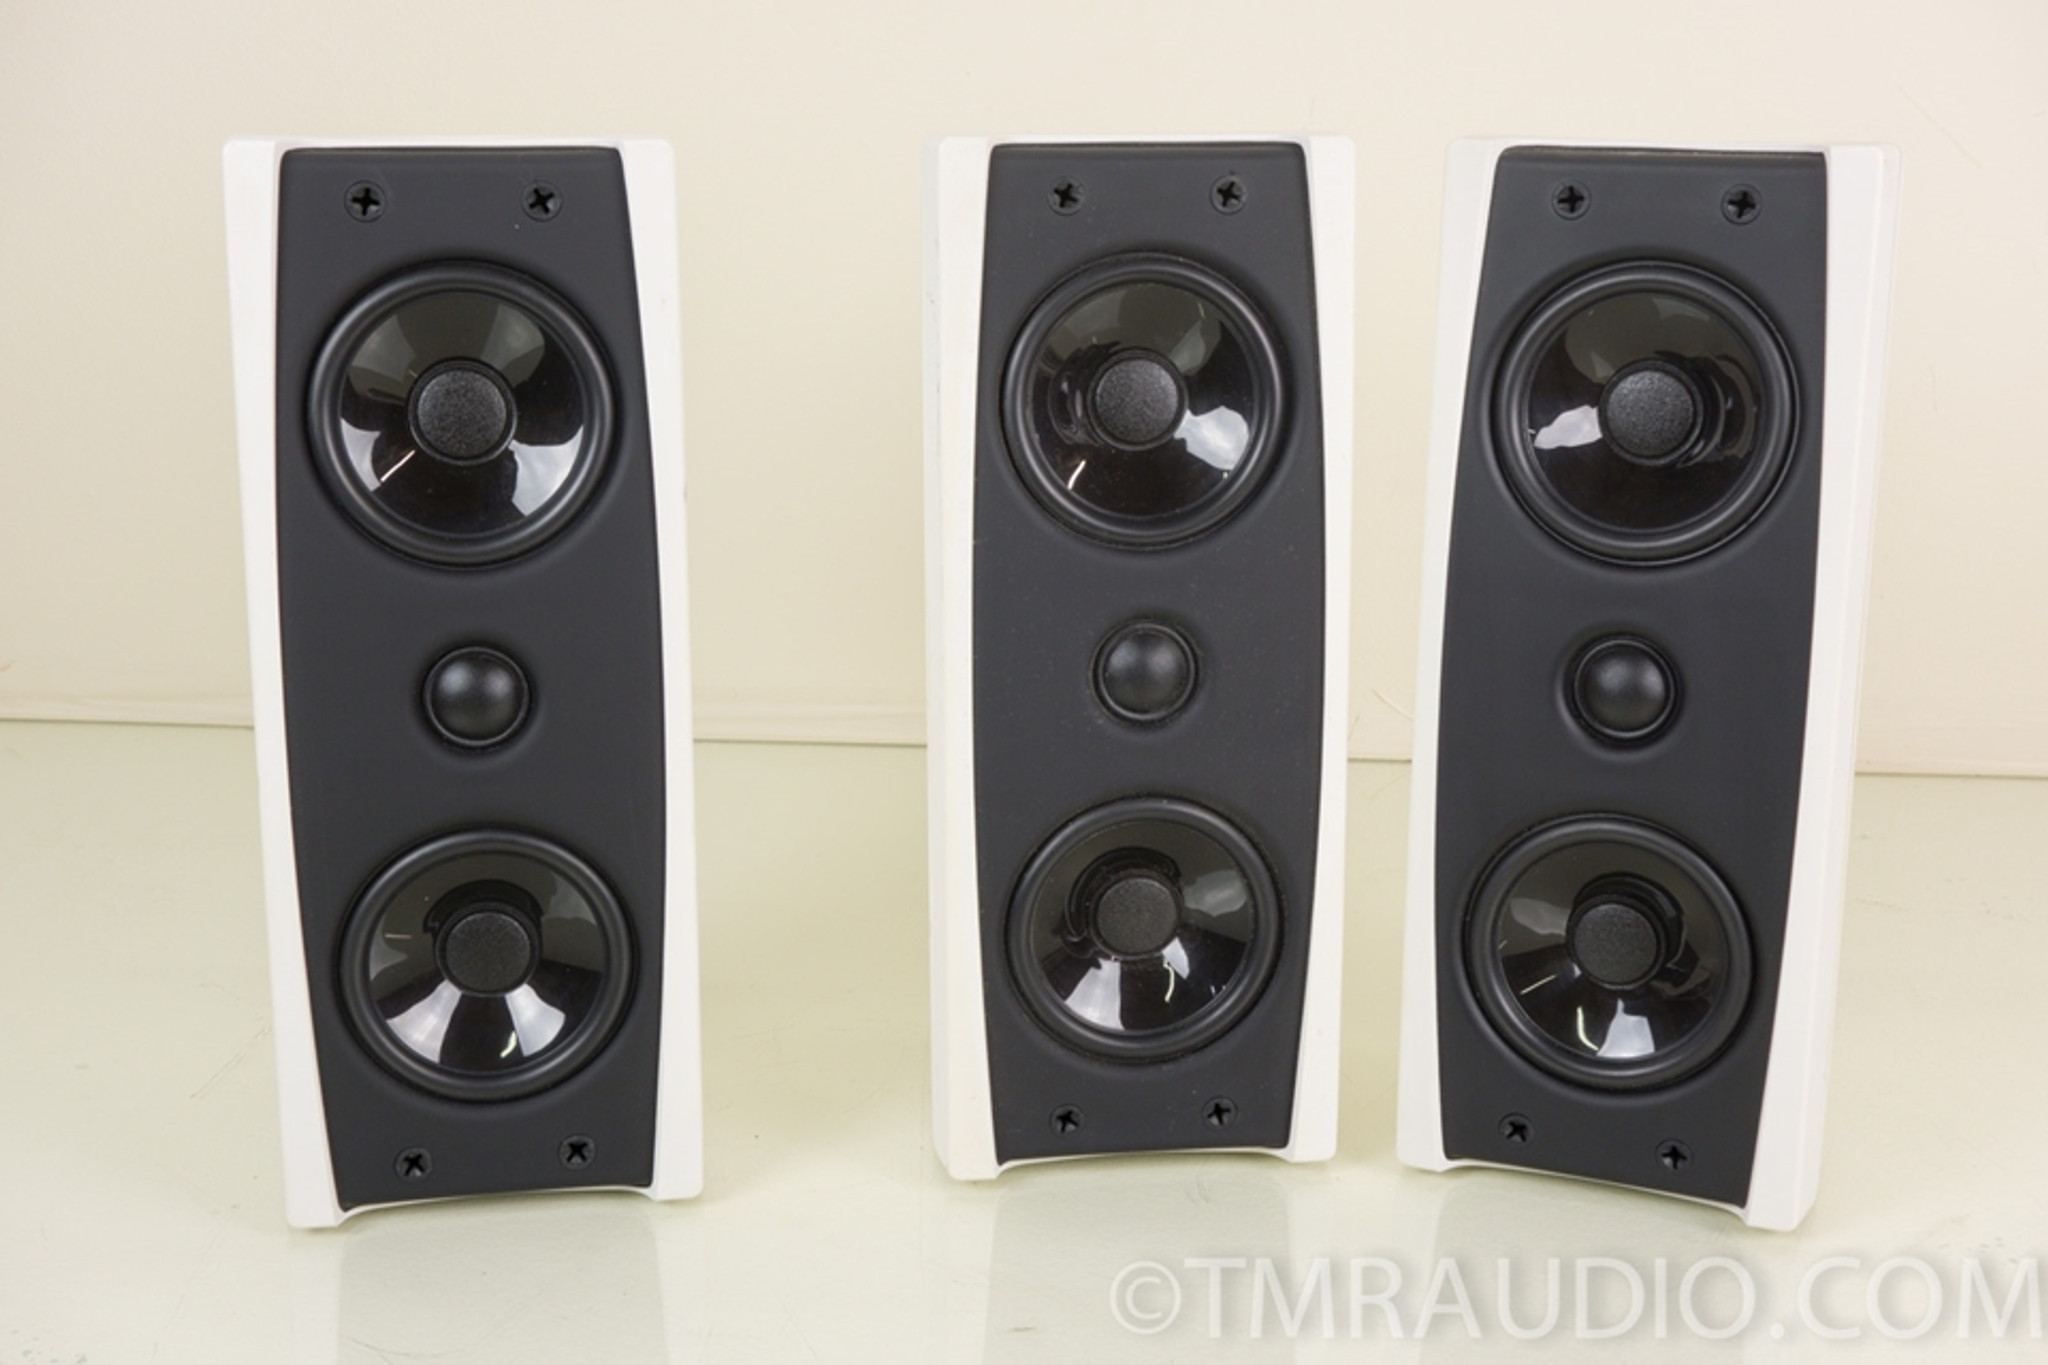 cambridge soundworks speakers sbs52 disassembled